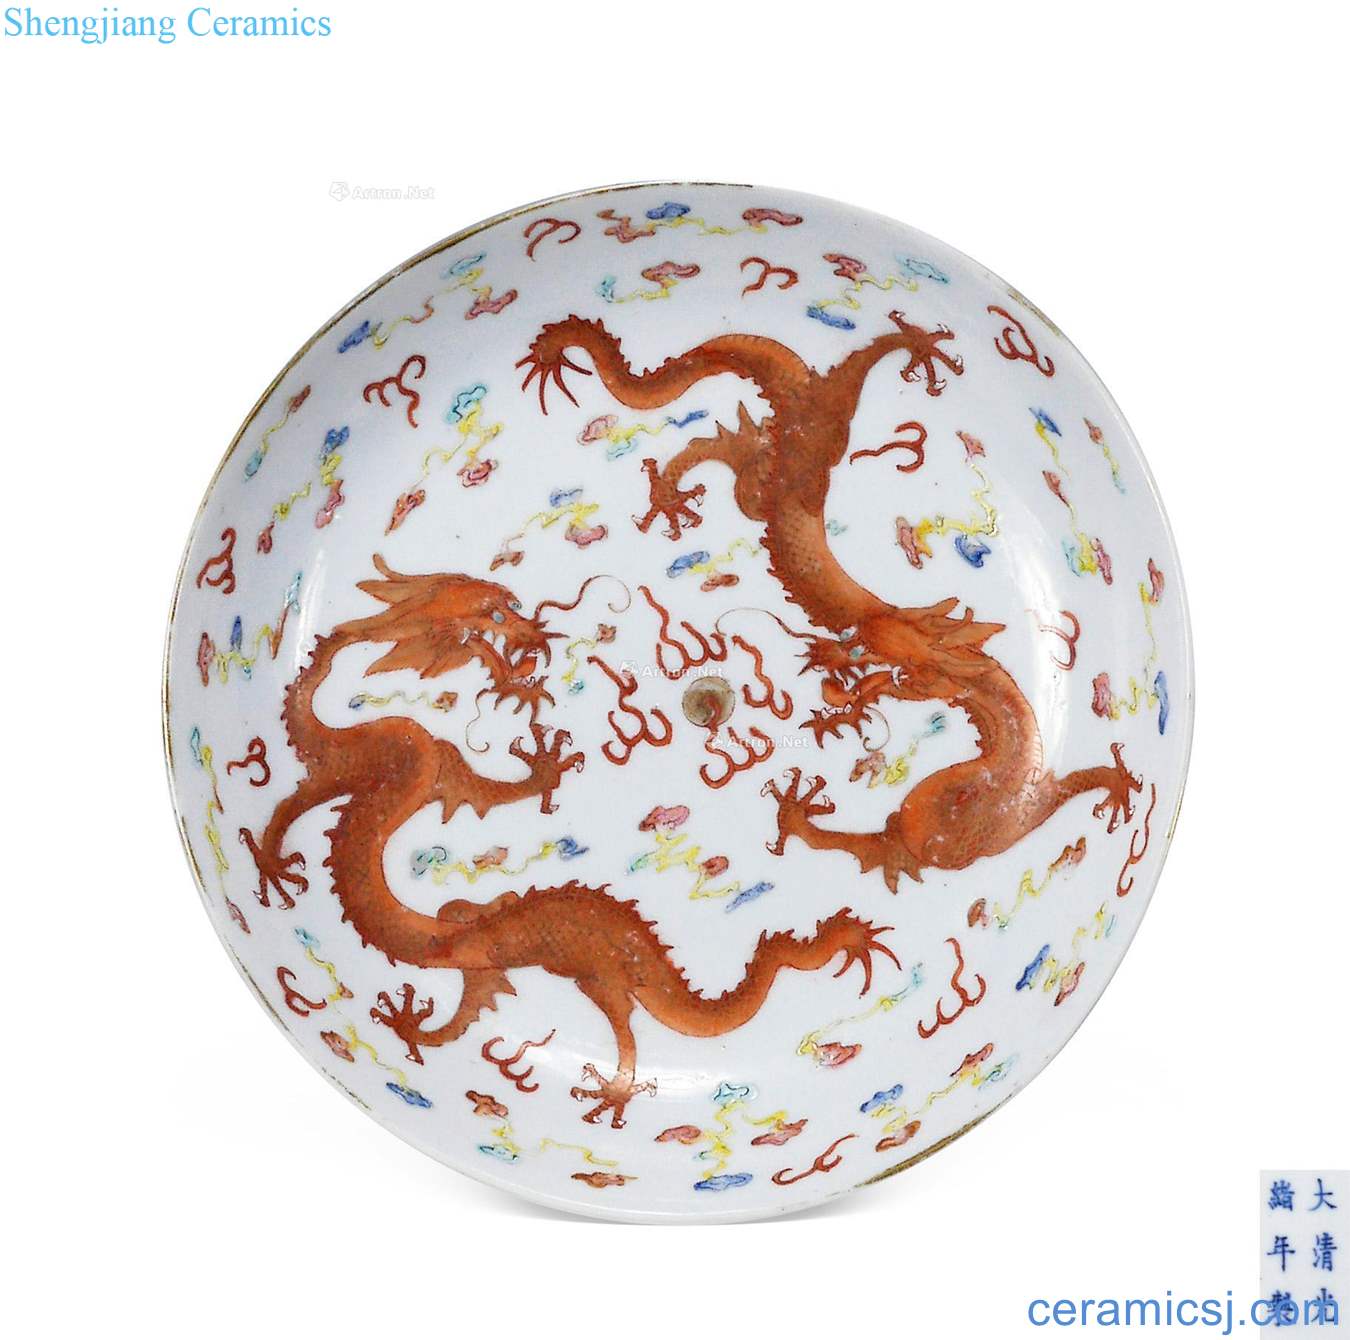 Guangxu pastel ssangyong's plate